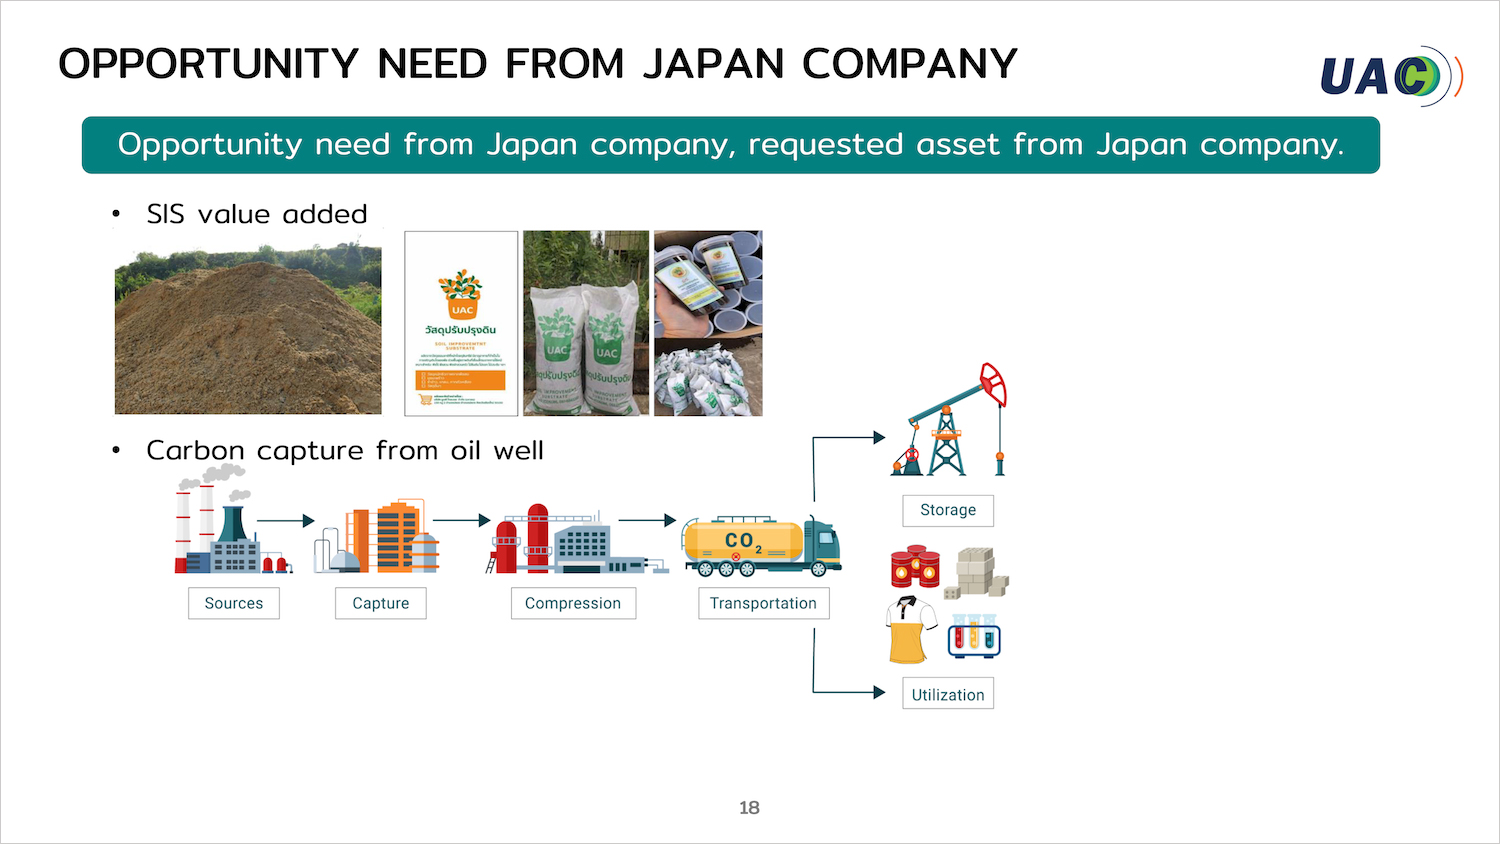 UACが求める日本企業との協業の機会